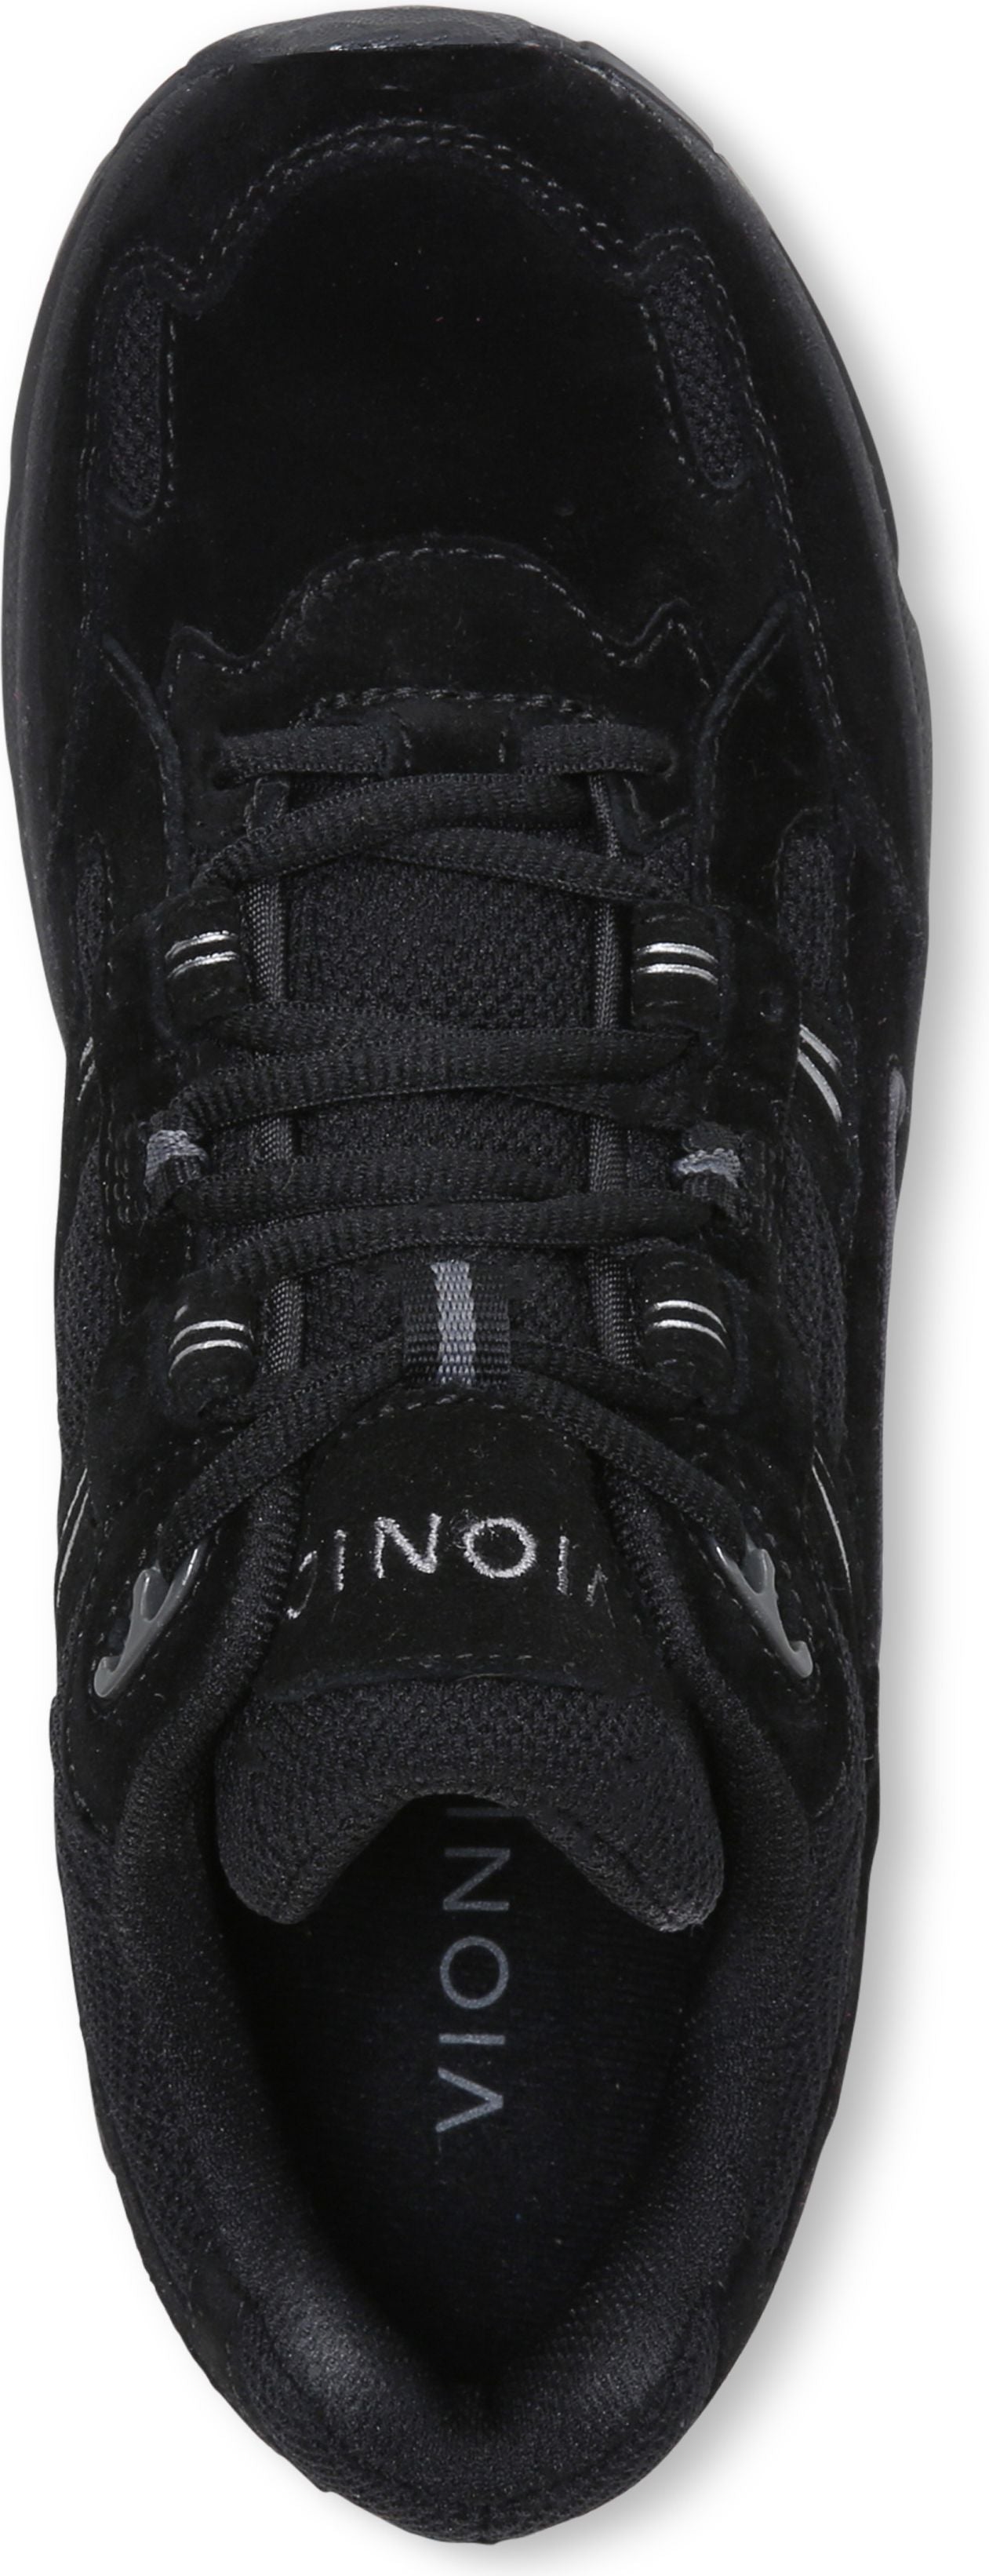 Vionic Shoes 23walk Black